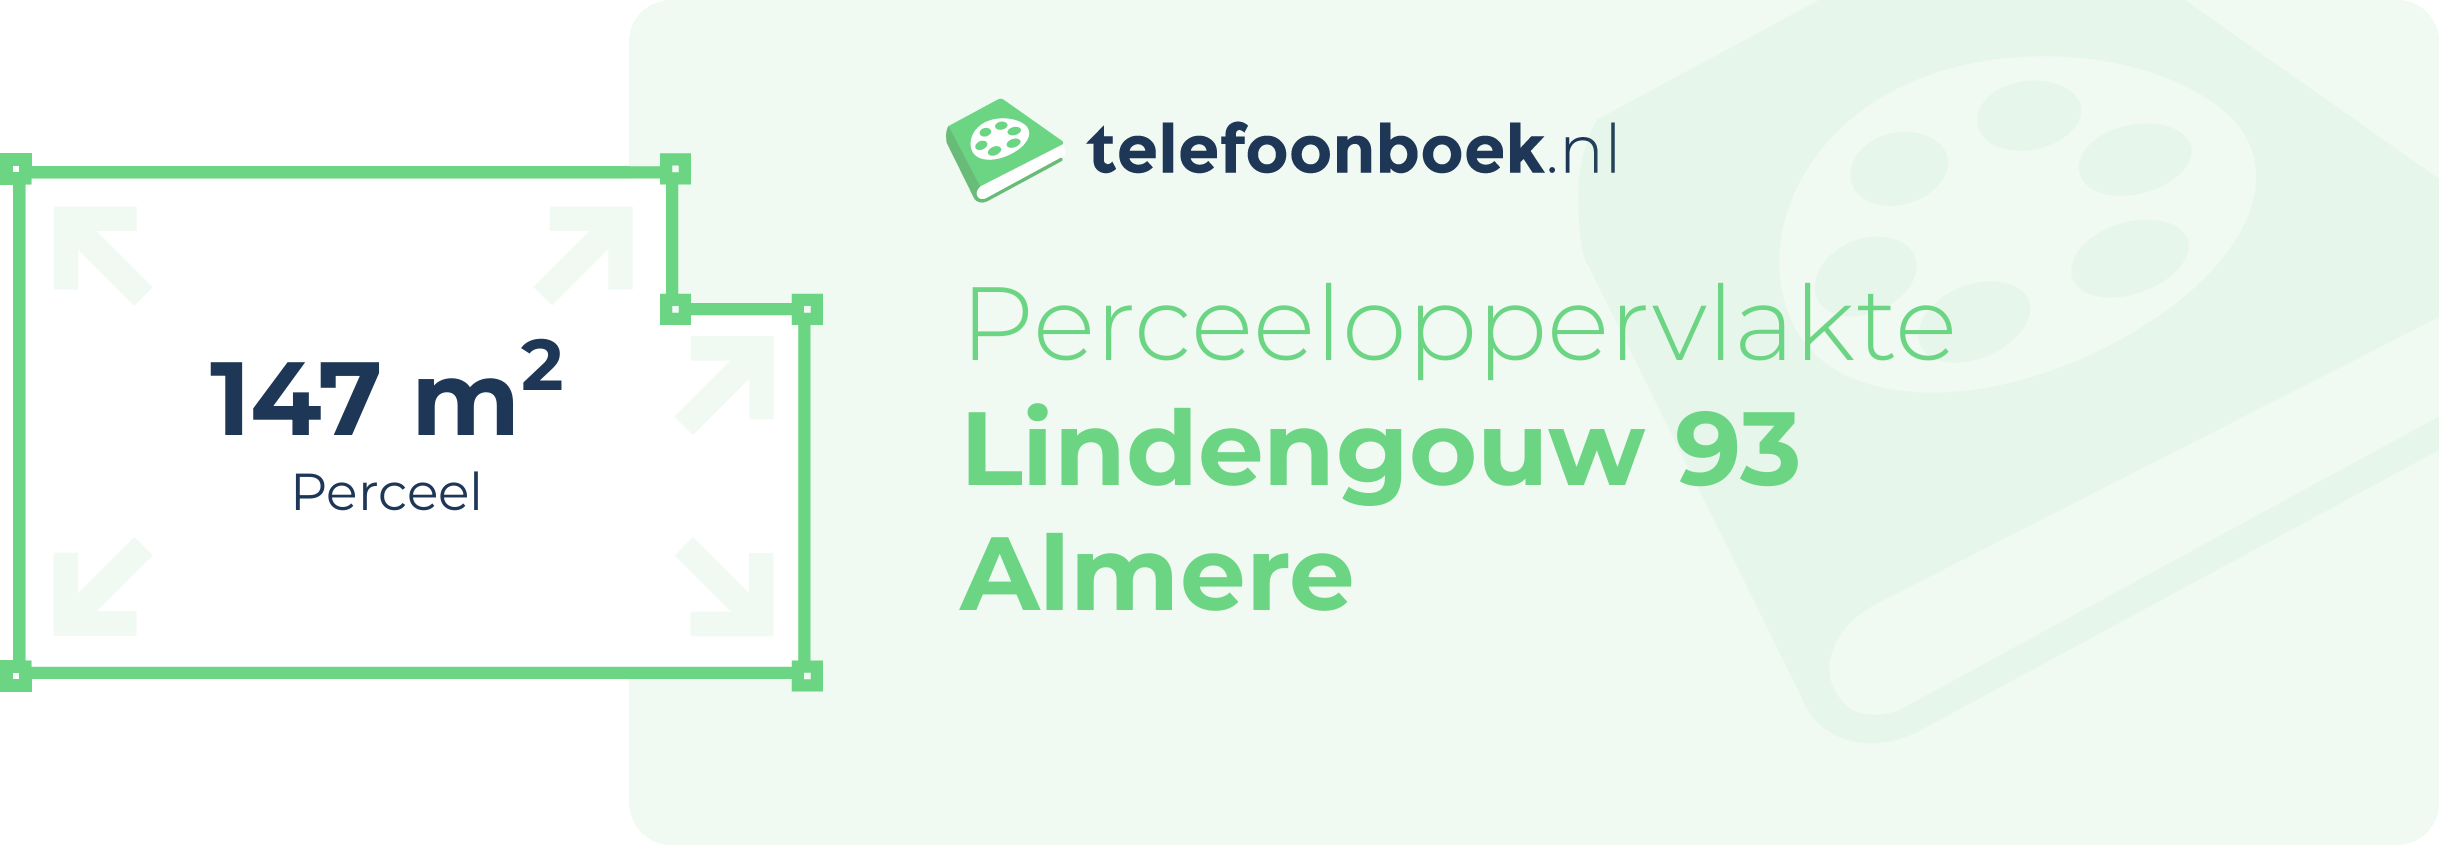 Perceeloppervlakte Lindengouw 93 Almere